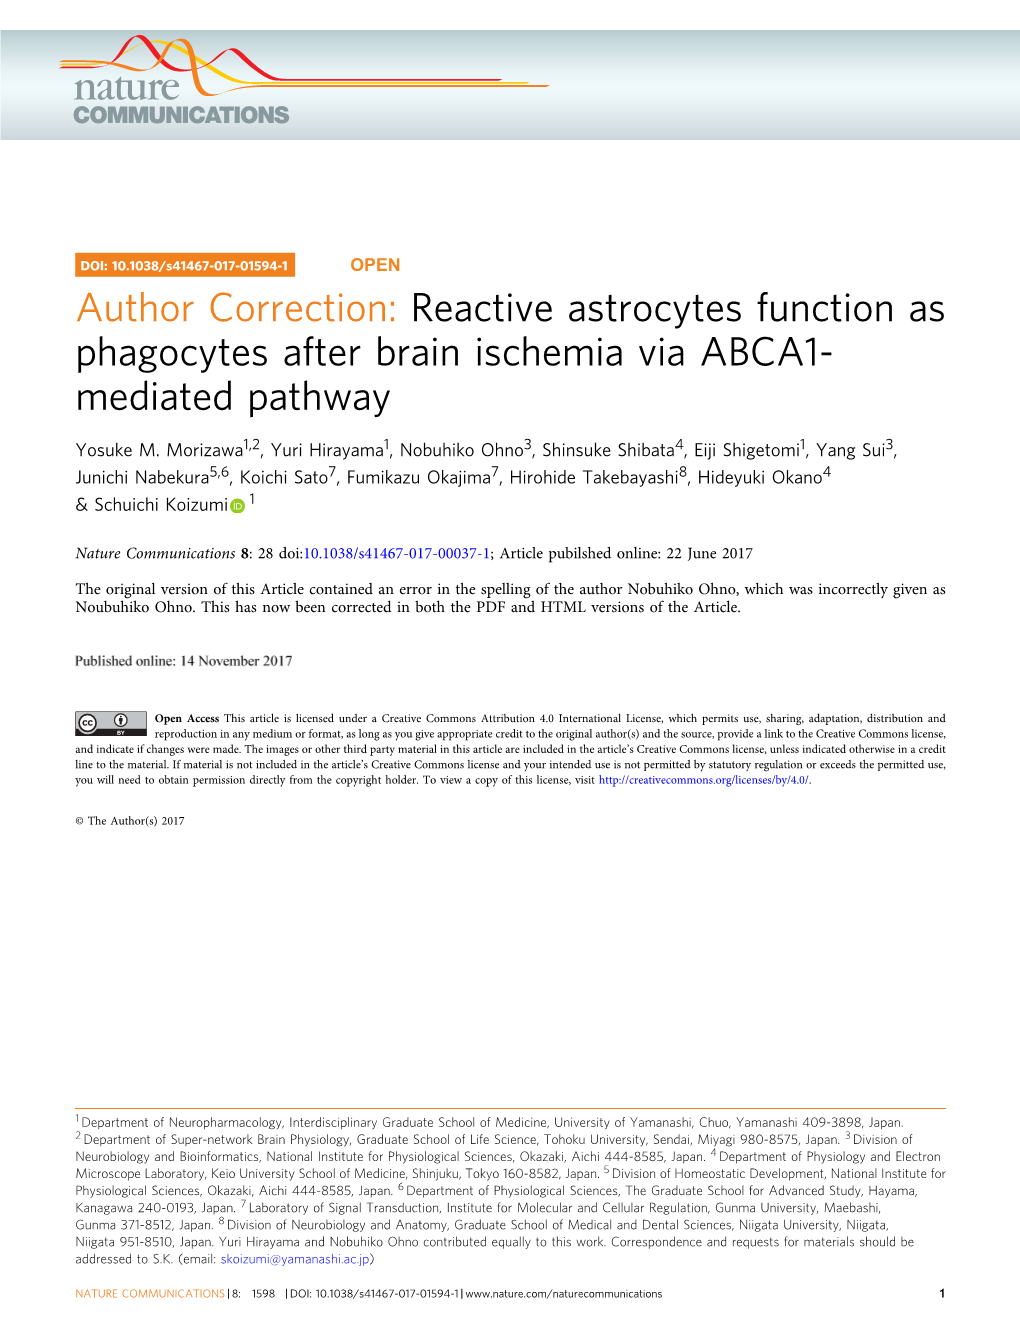 Reactive Astrocytes Function As Phagocytes After Brain Ischemia Via ABCA1- Mediated Pathway